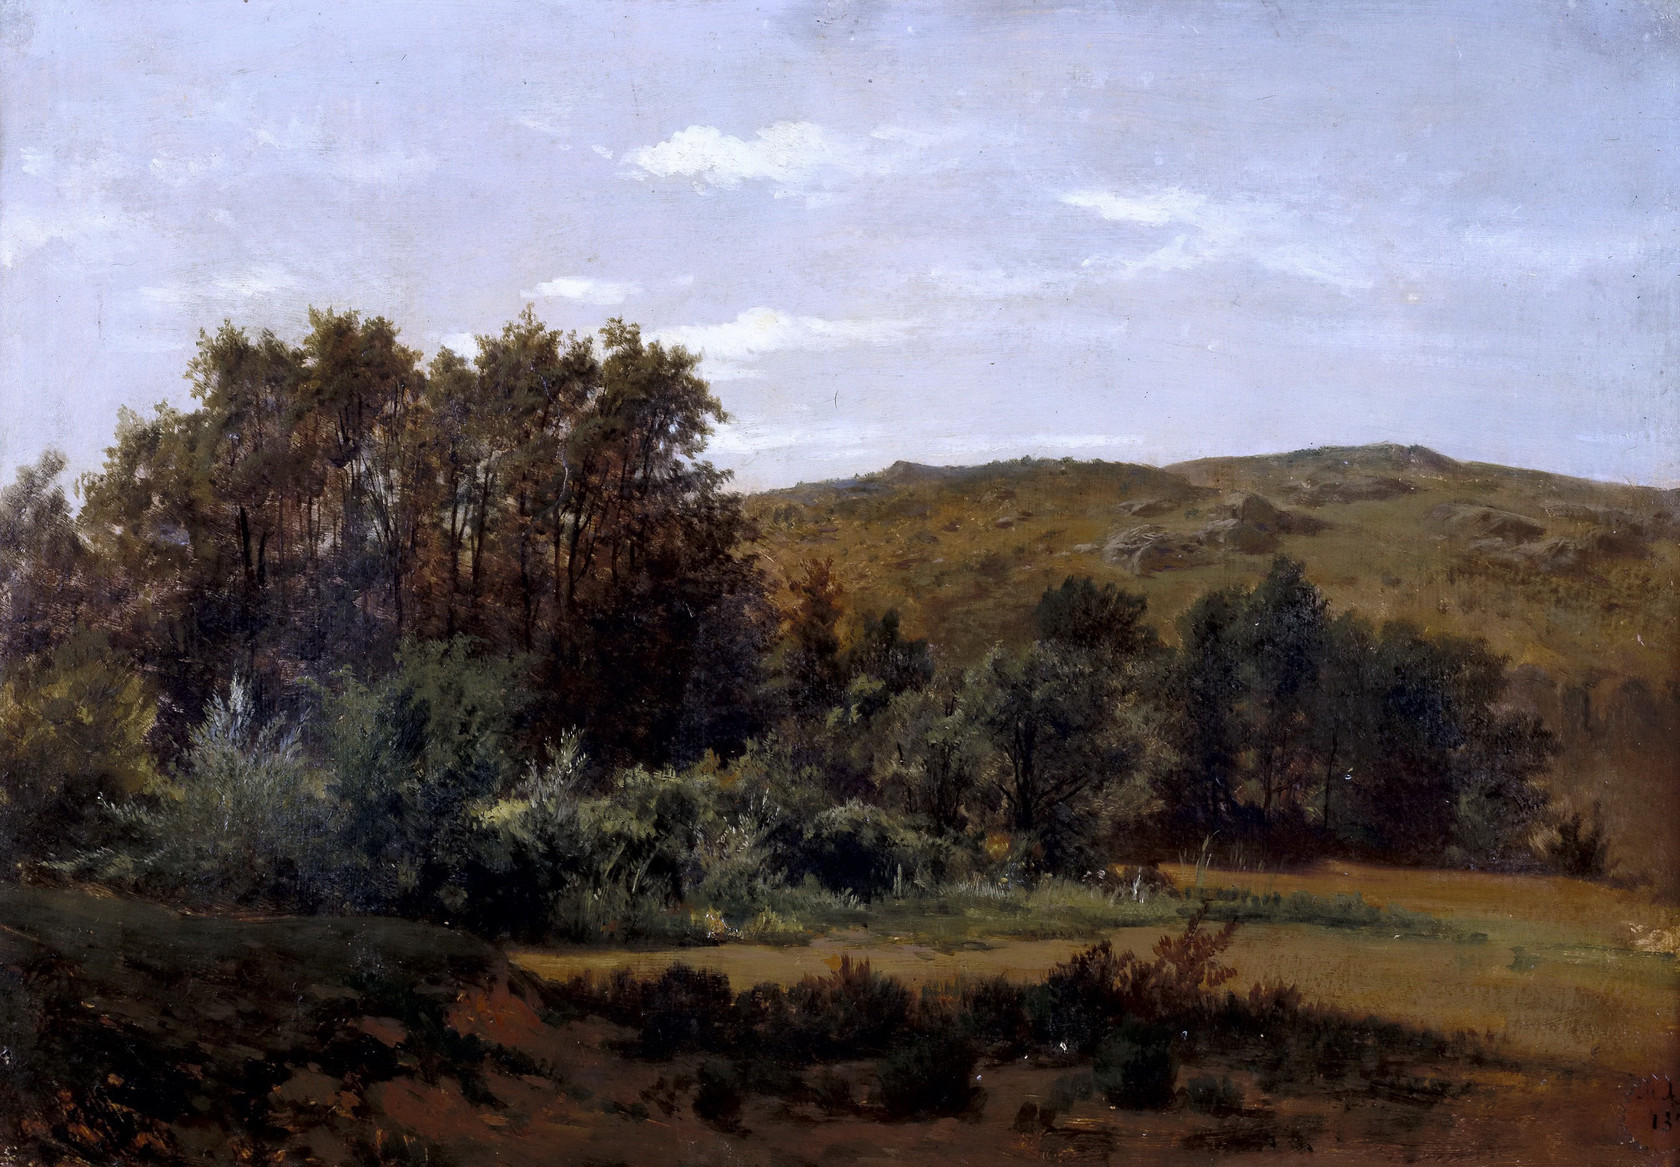 Картина - Арболеда, 1856